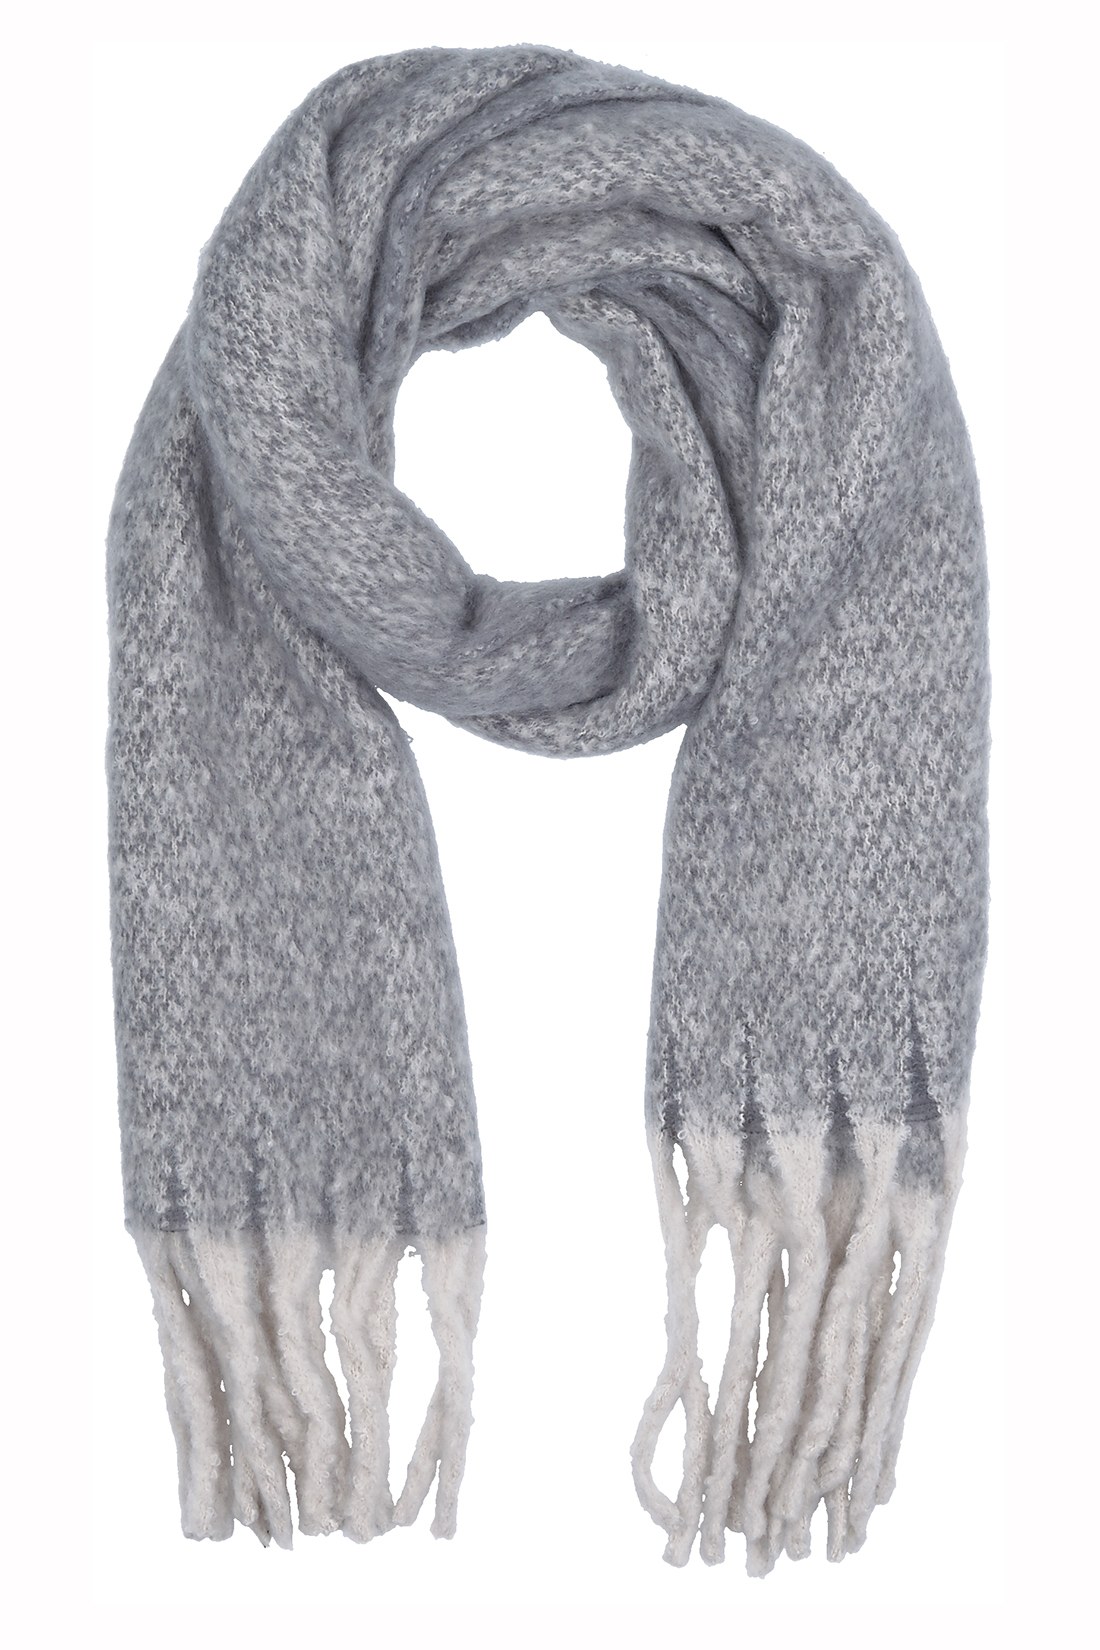 Шерстяной шарф с бахромой (арт. baon B358501), размер Без/раз, цвет серый